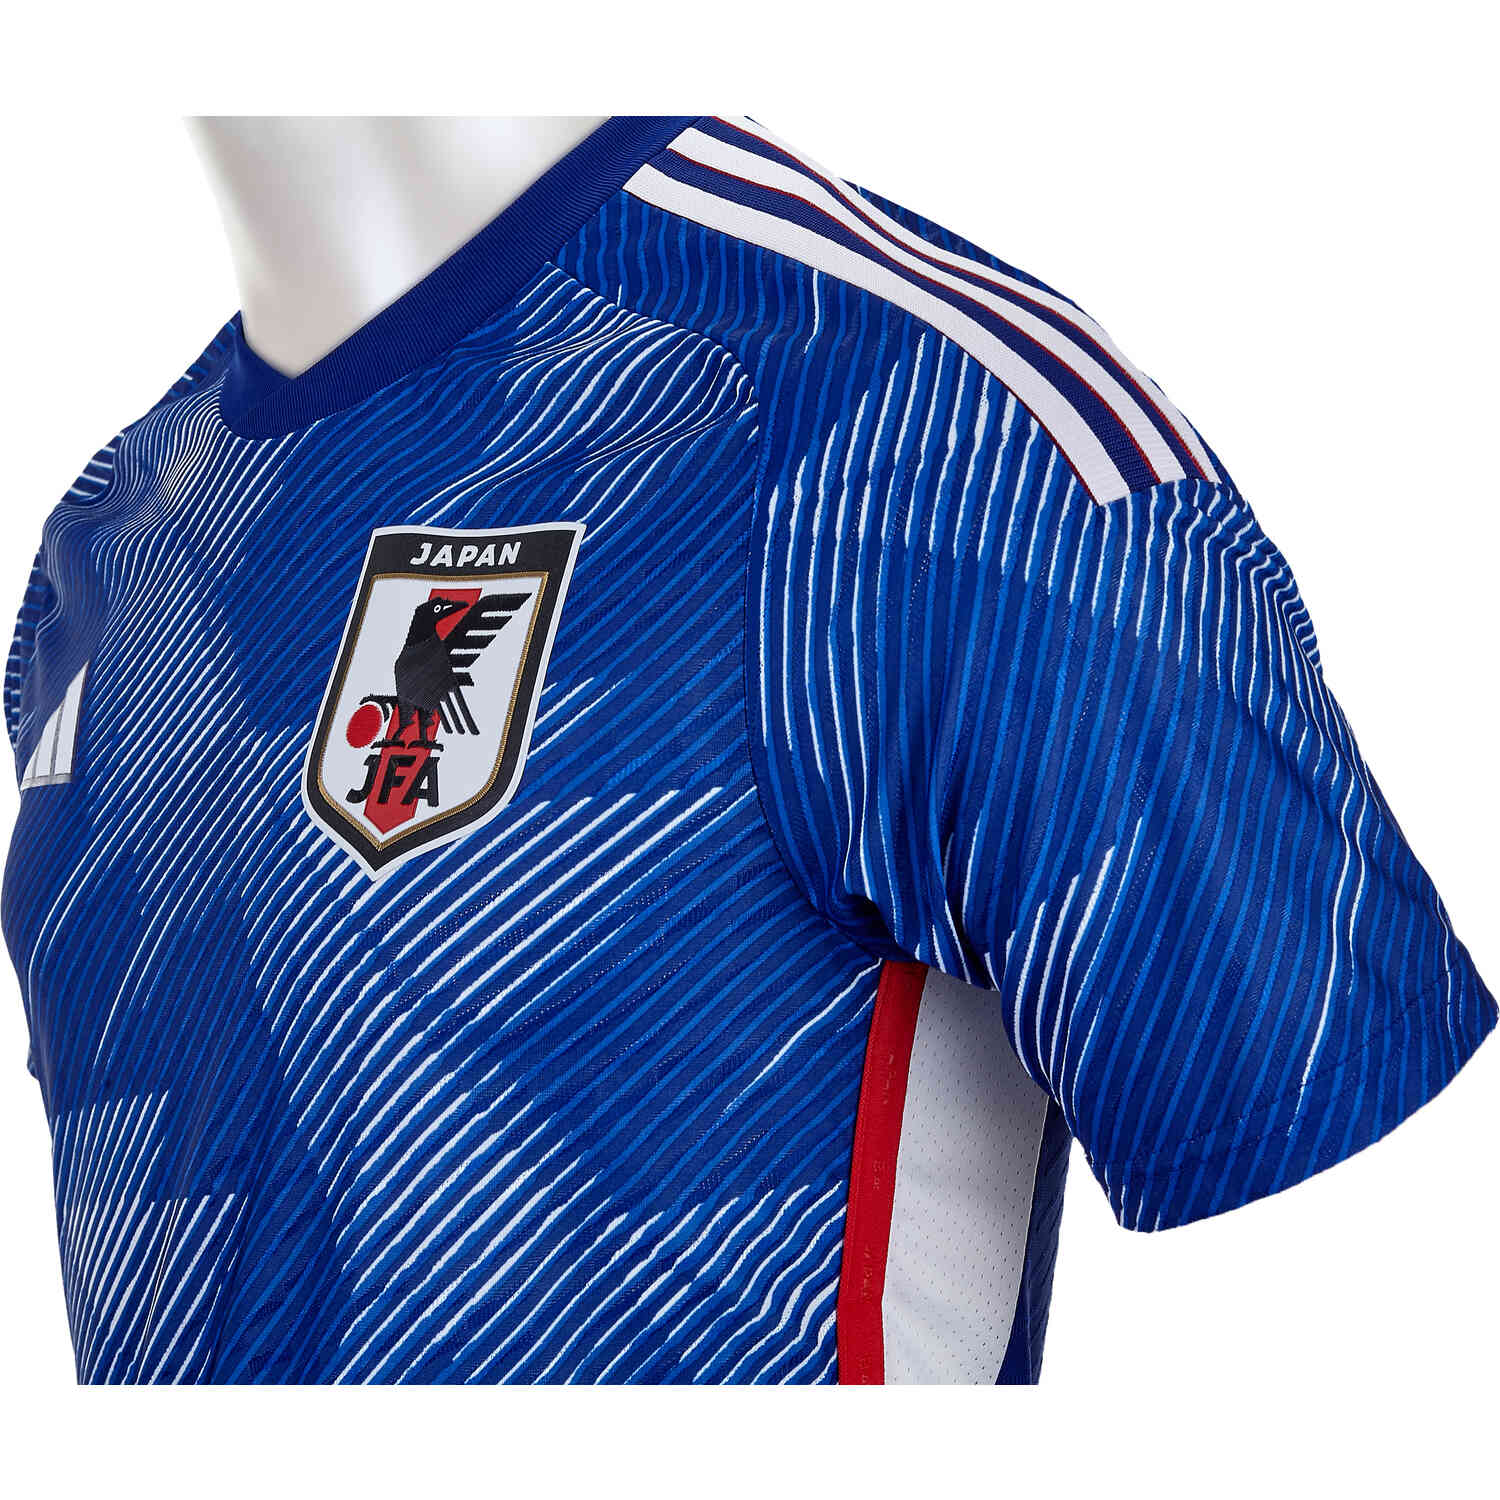 adidas Japan 22-23 Home Authentic Jersey - Japan Blue - Soccer Shop USA